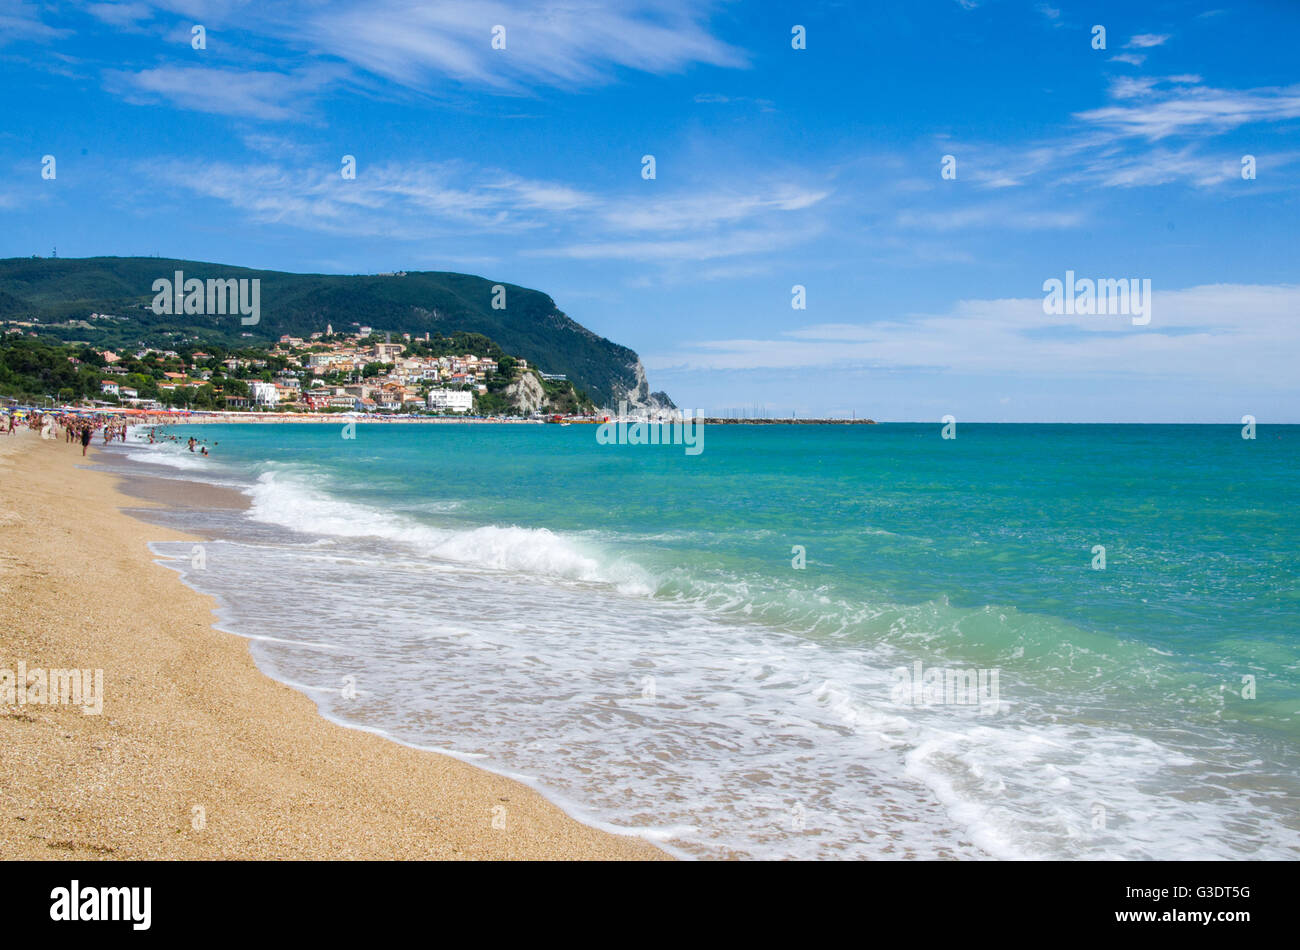 The beach of Numana, Marche region - Italy. Stock Photo